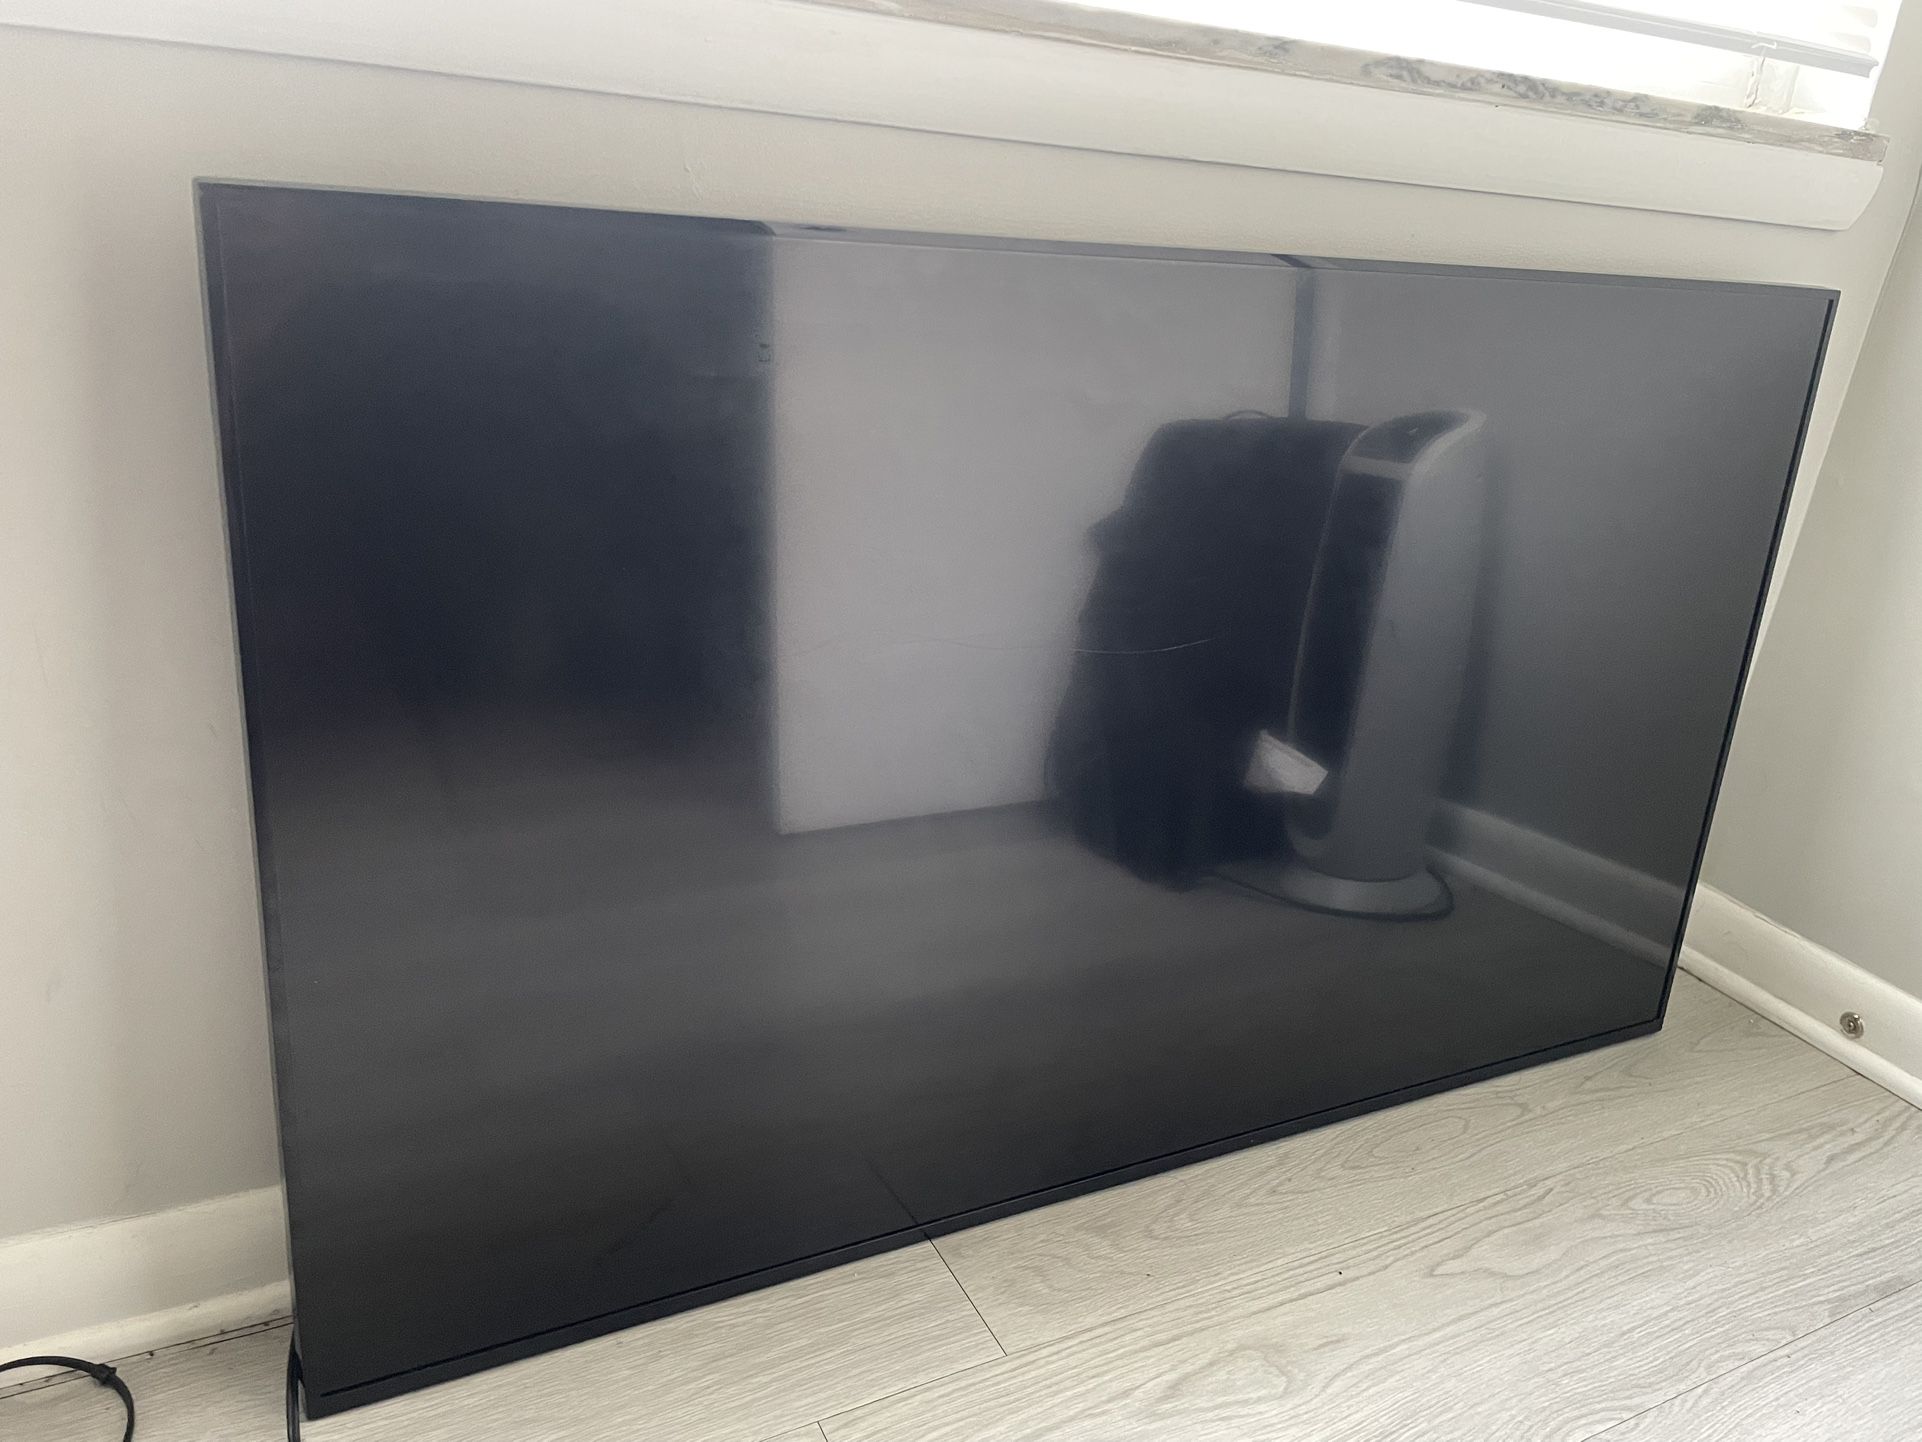 50” Samsung Flat Screen Tv 